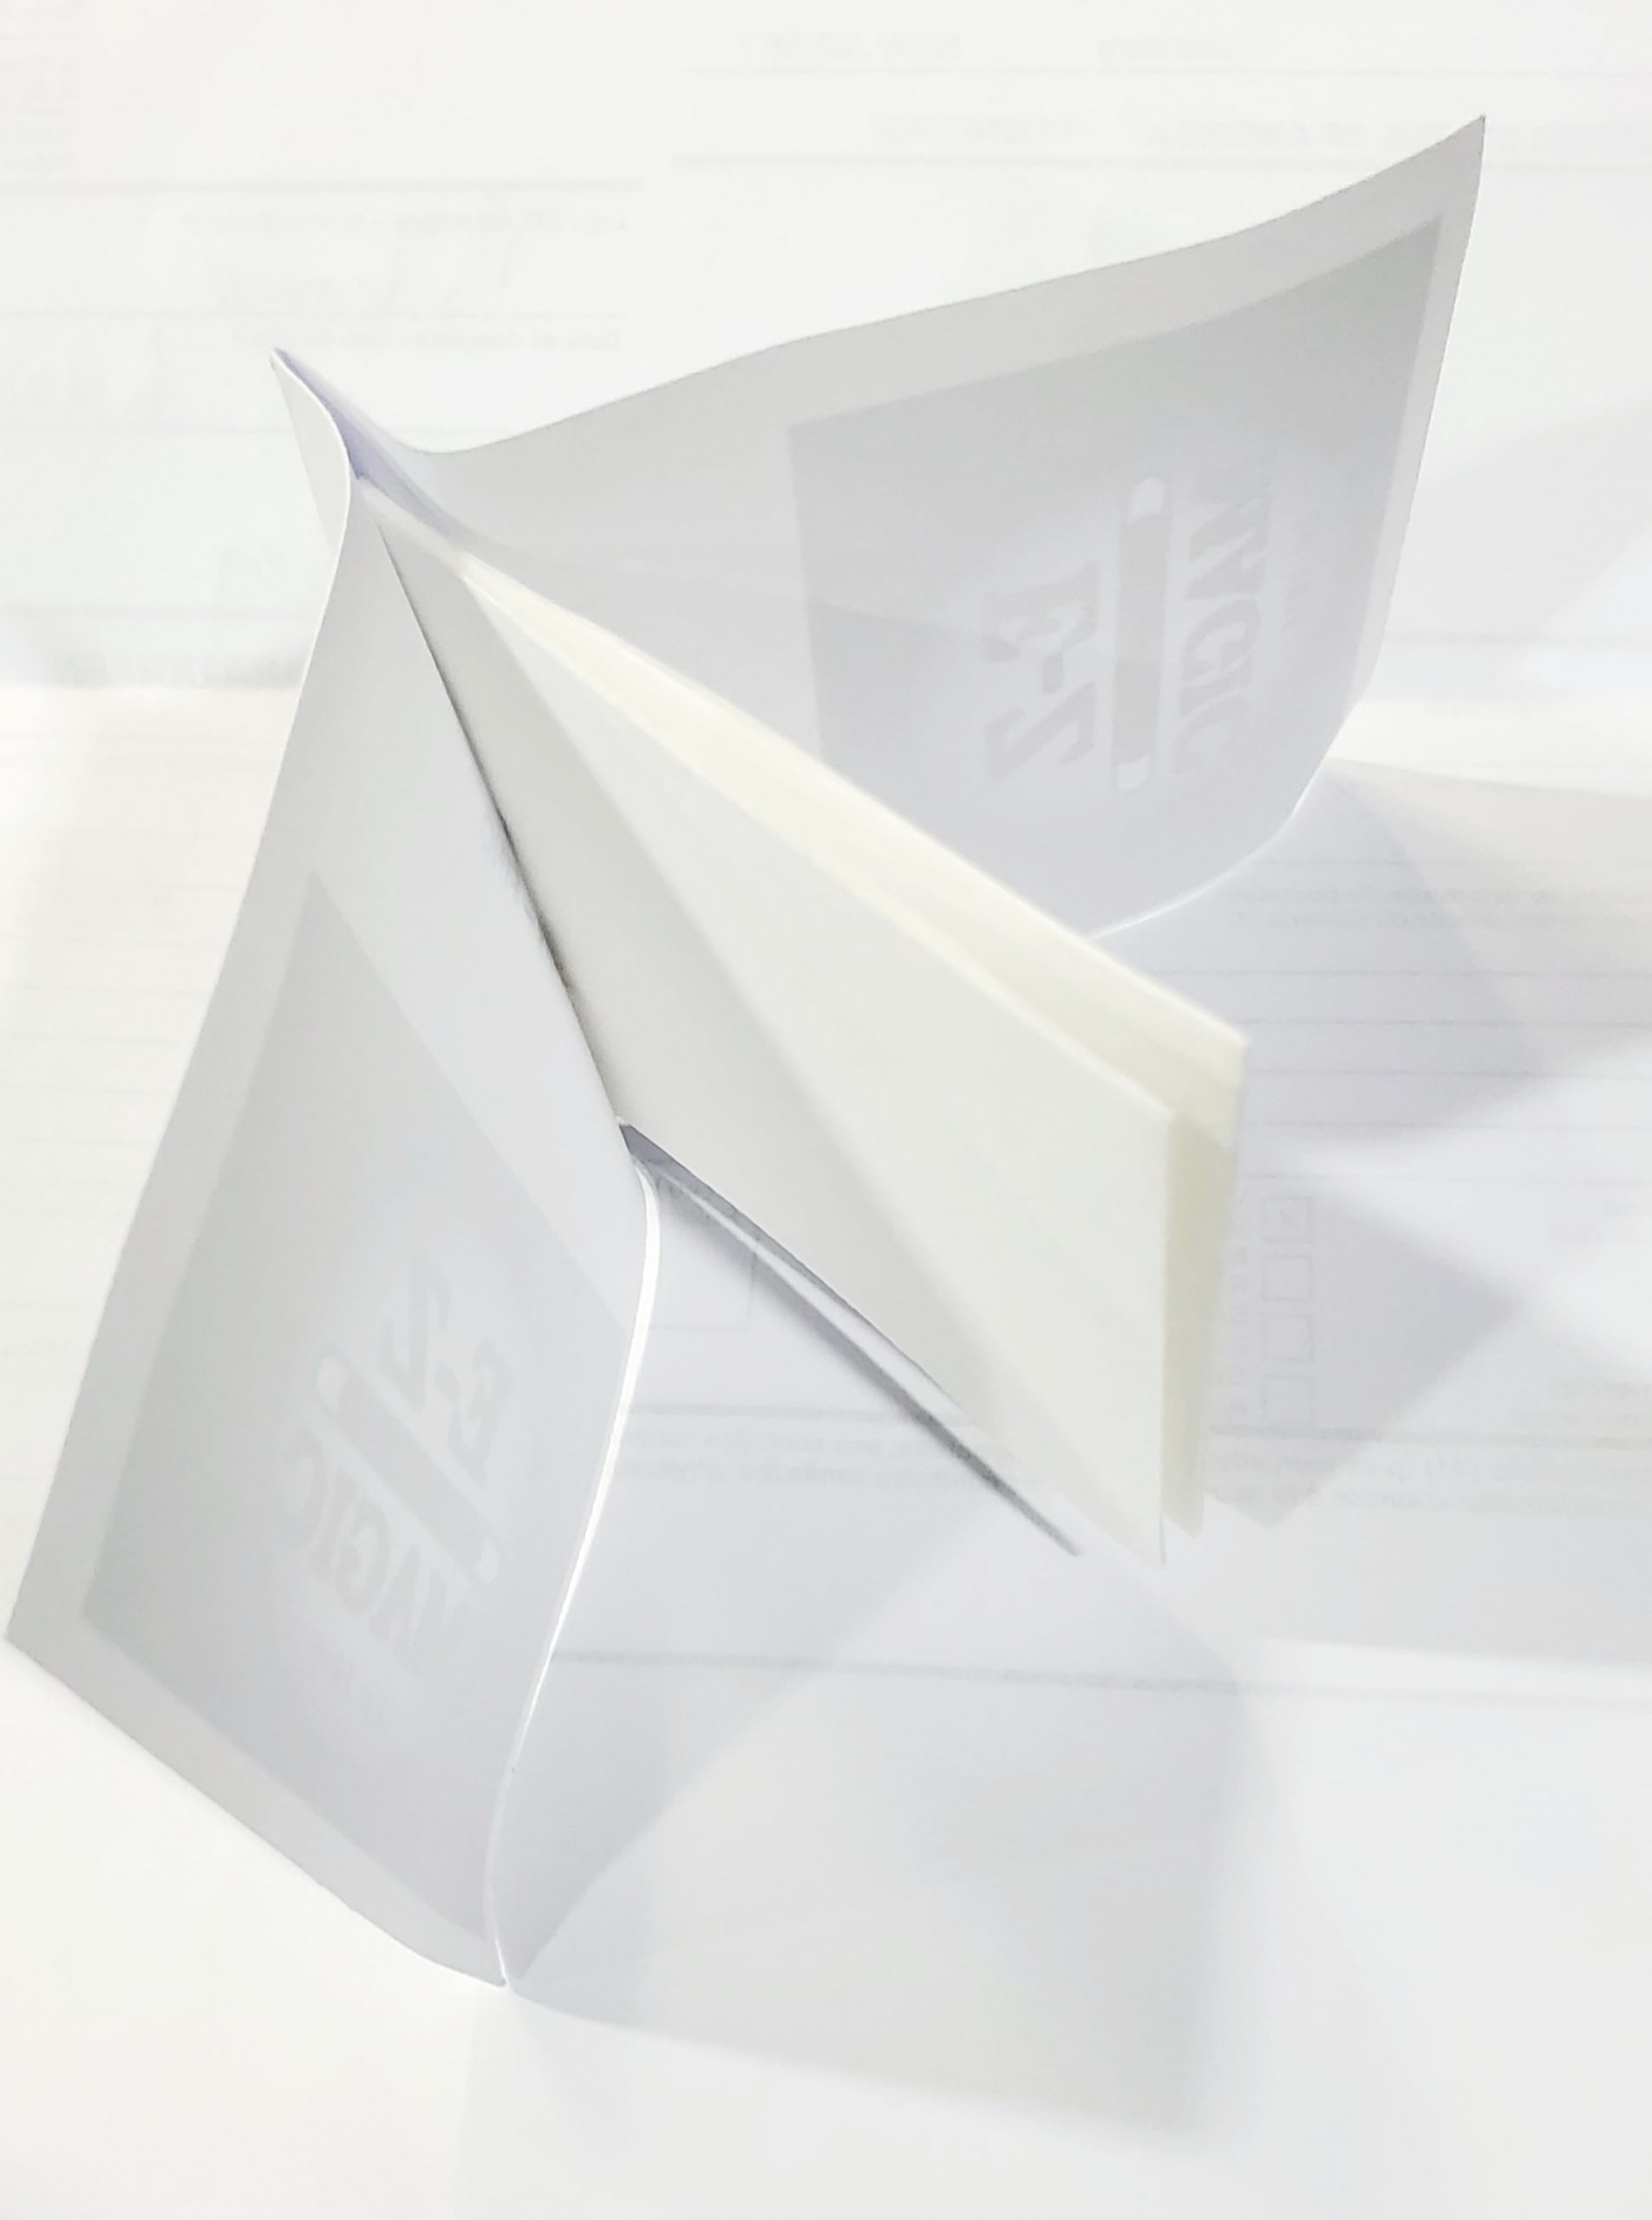 Panda Magic Thin Flash Paper Pads Magic Tricks (20 Sheets)